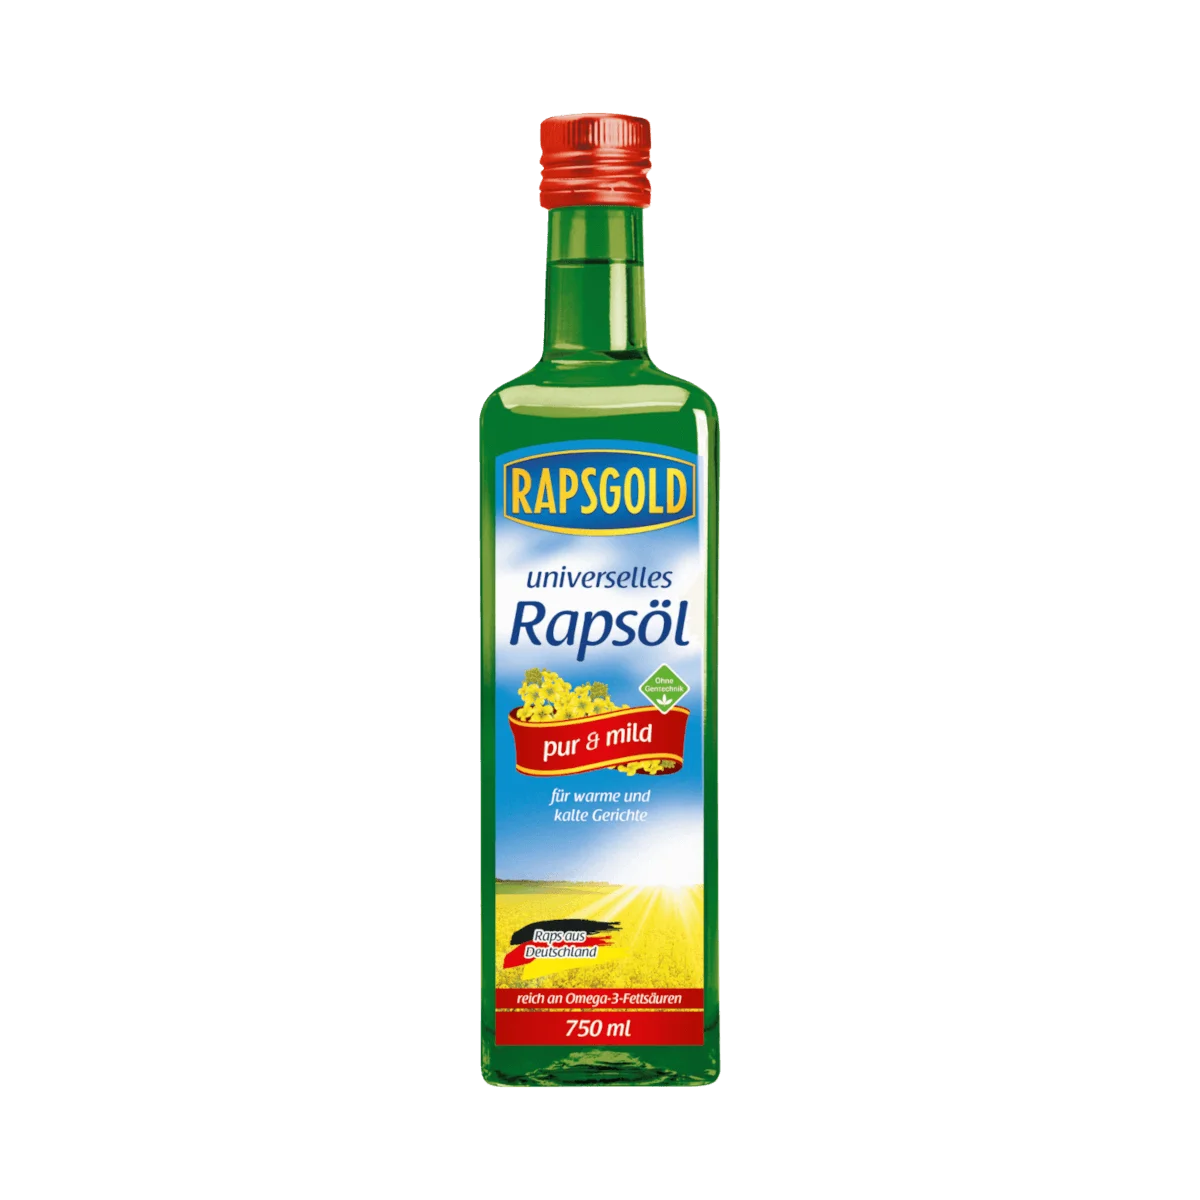 Rapsgold Rapsöl pur & mild, 750 ml